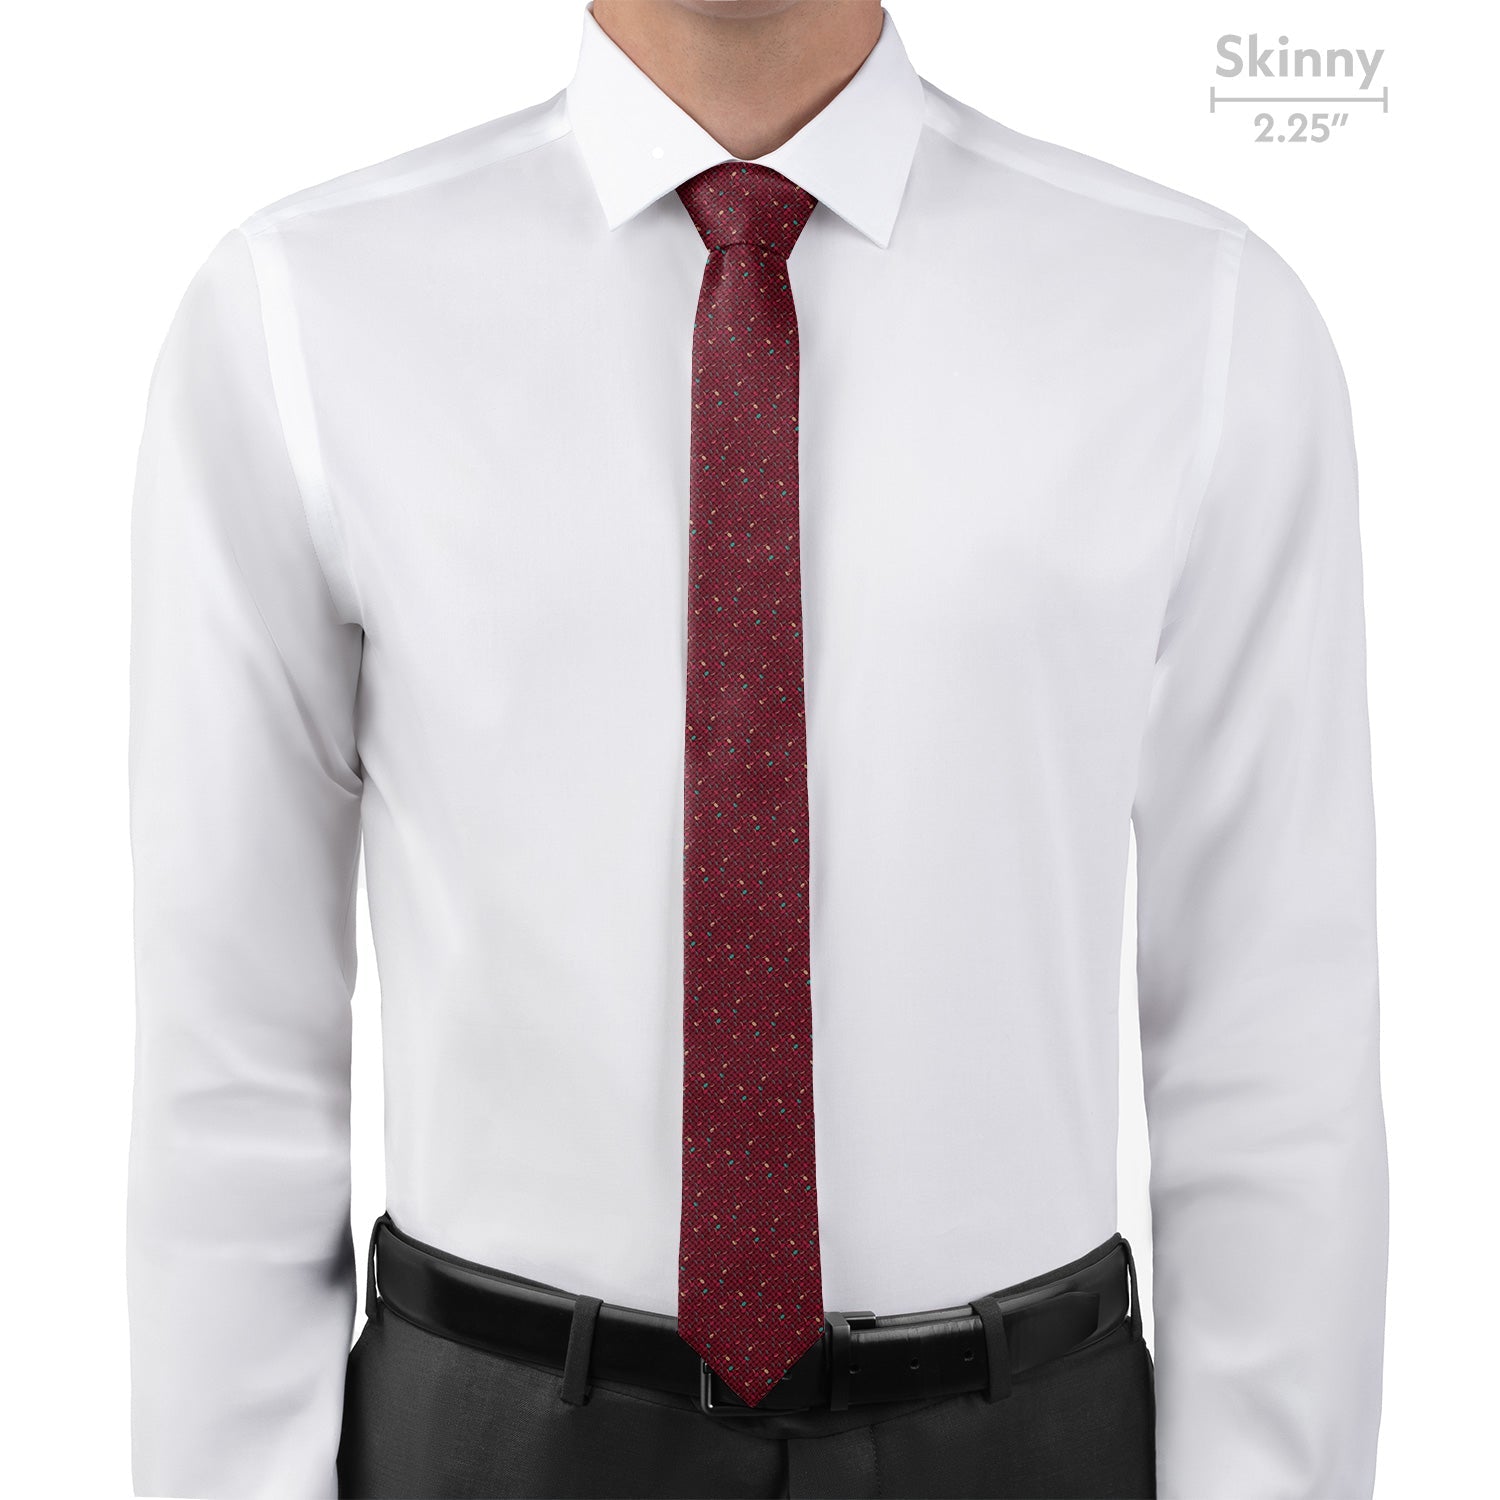 Speckled Necktie - Skinny 2.25" -  - Knotty Tie Co.